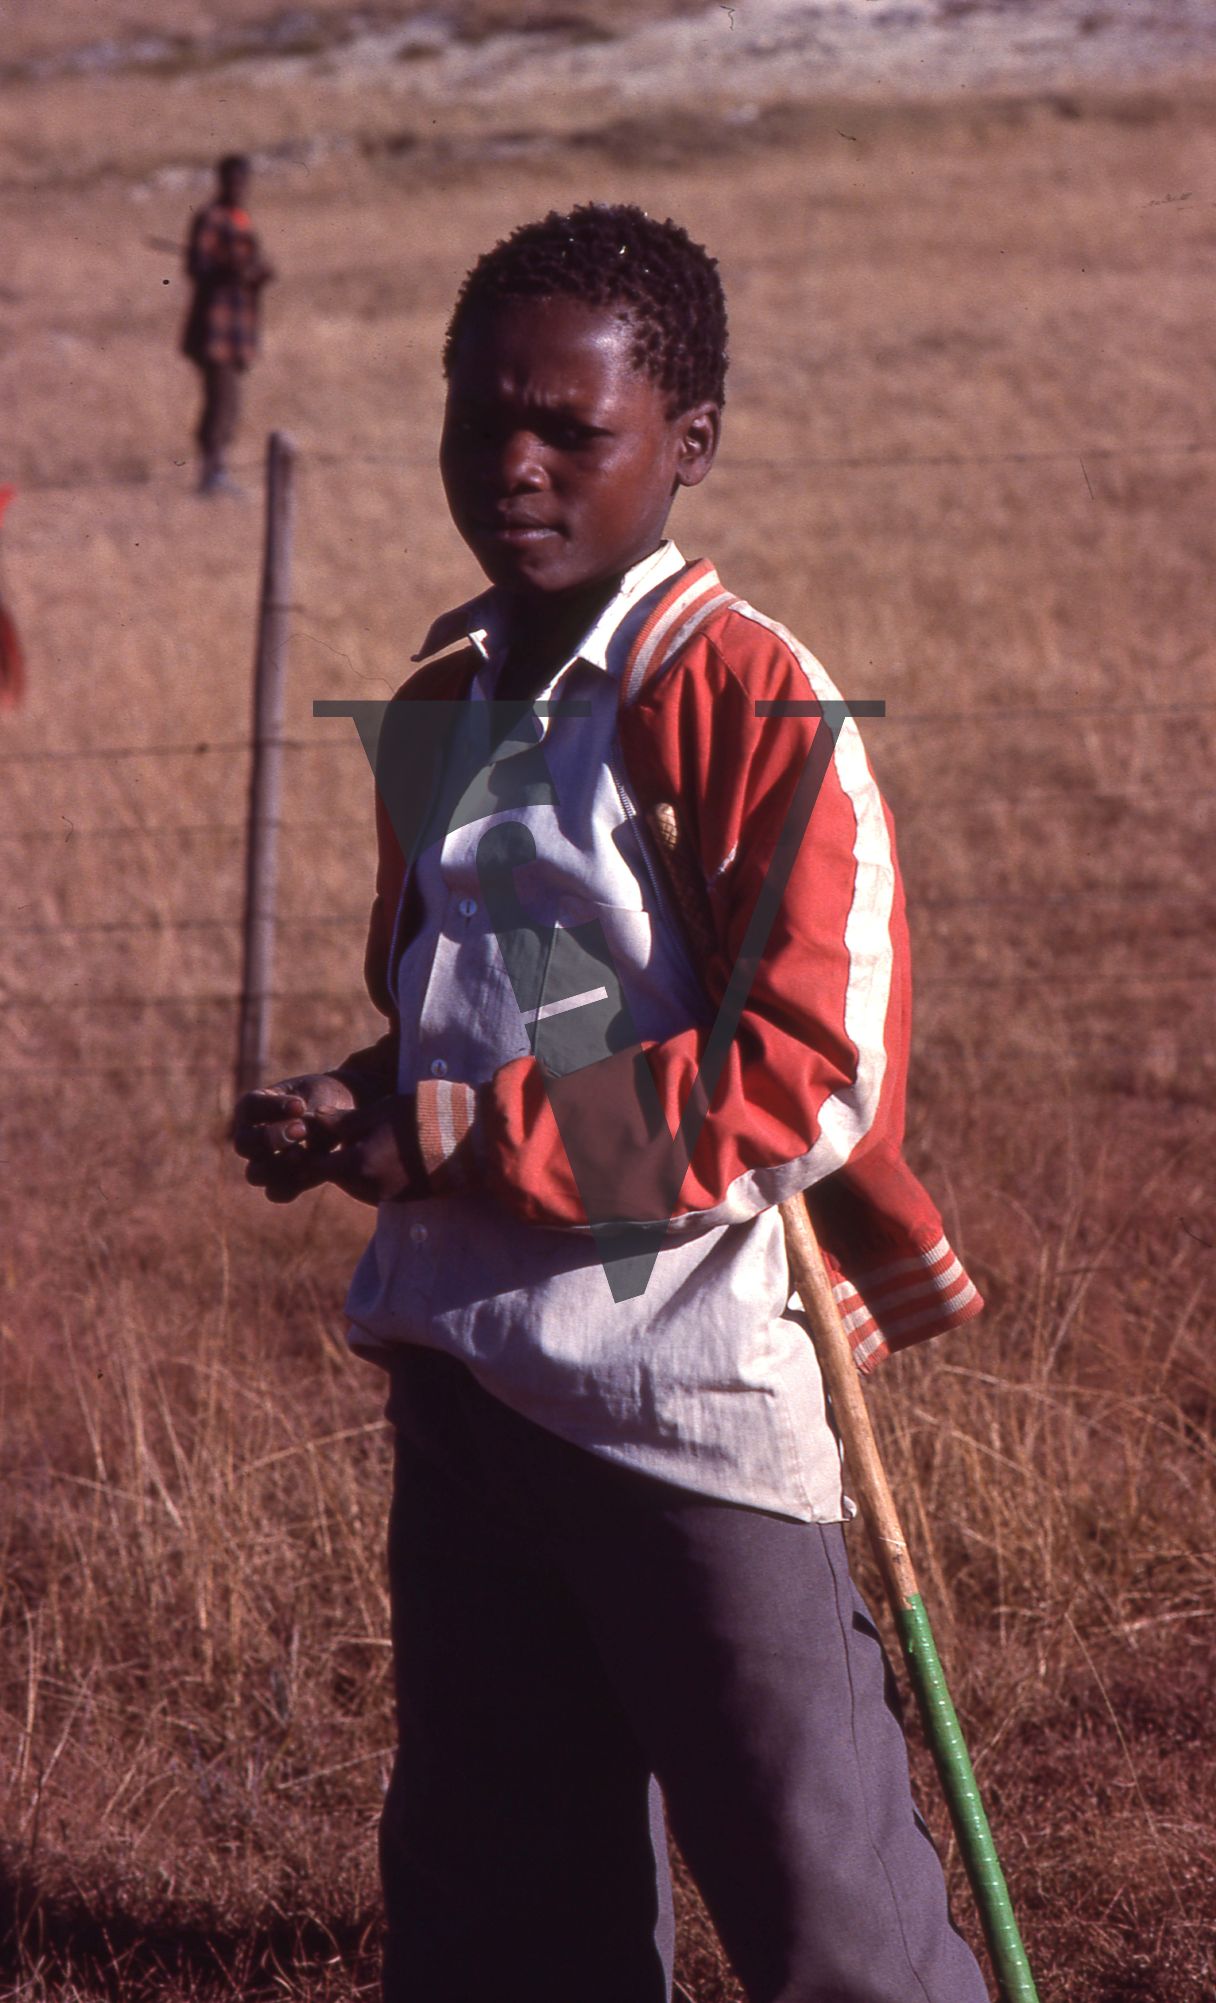 South Africa, Transkei, landscape, boy, portrait, mid-shot.